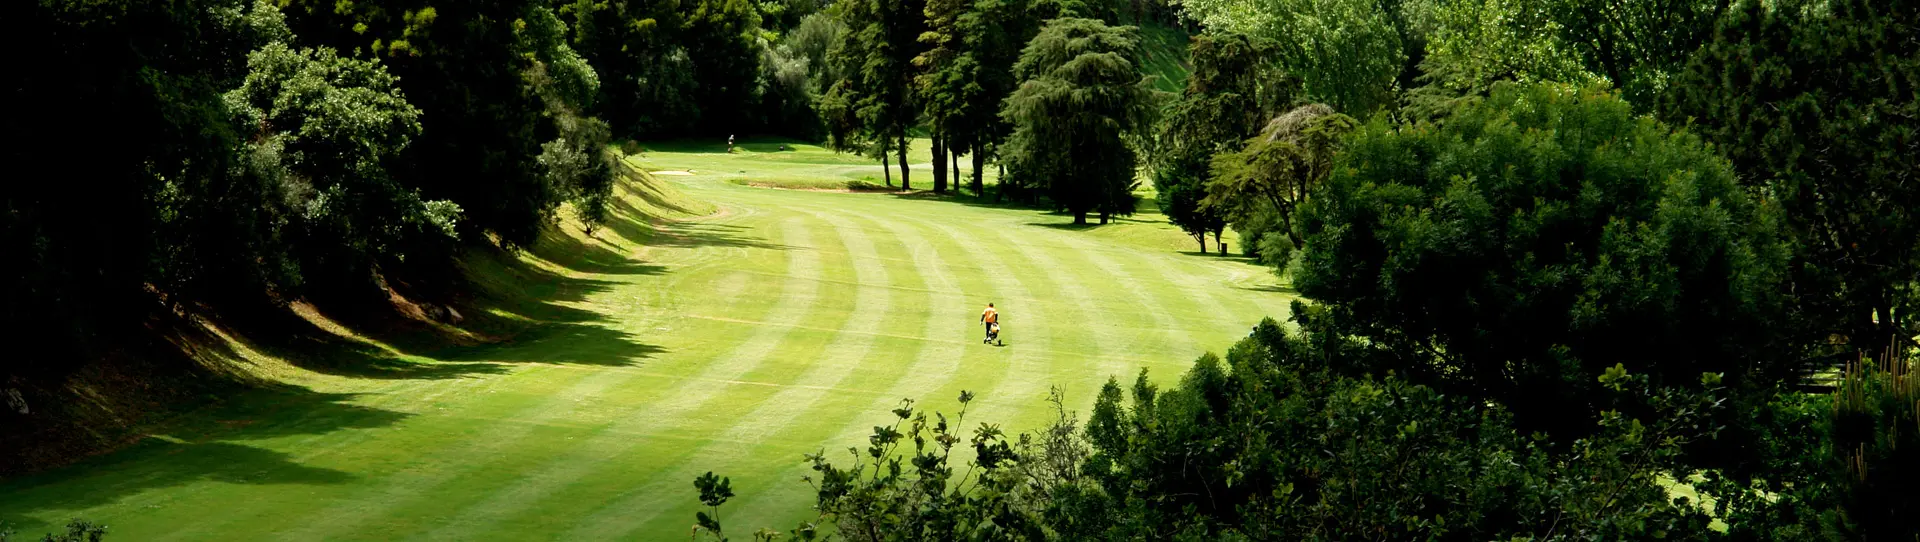 Portugal golf holidays - Cascais Silver Experience - Photo 3